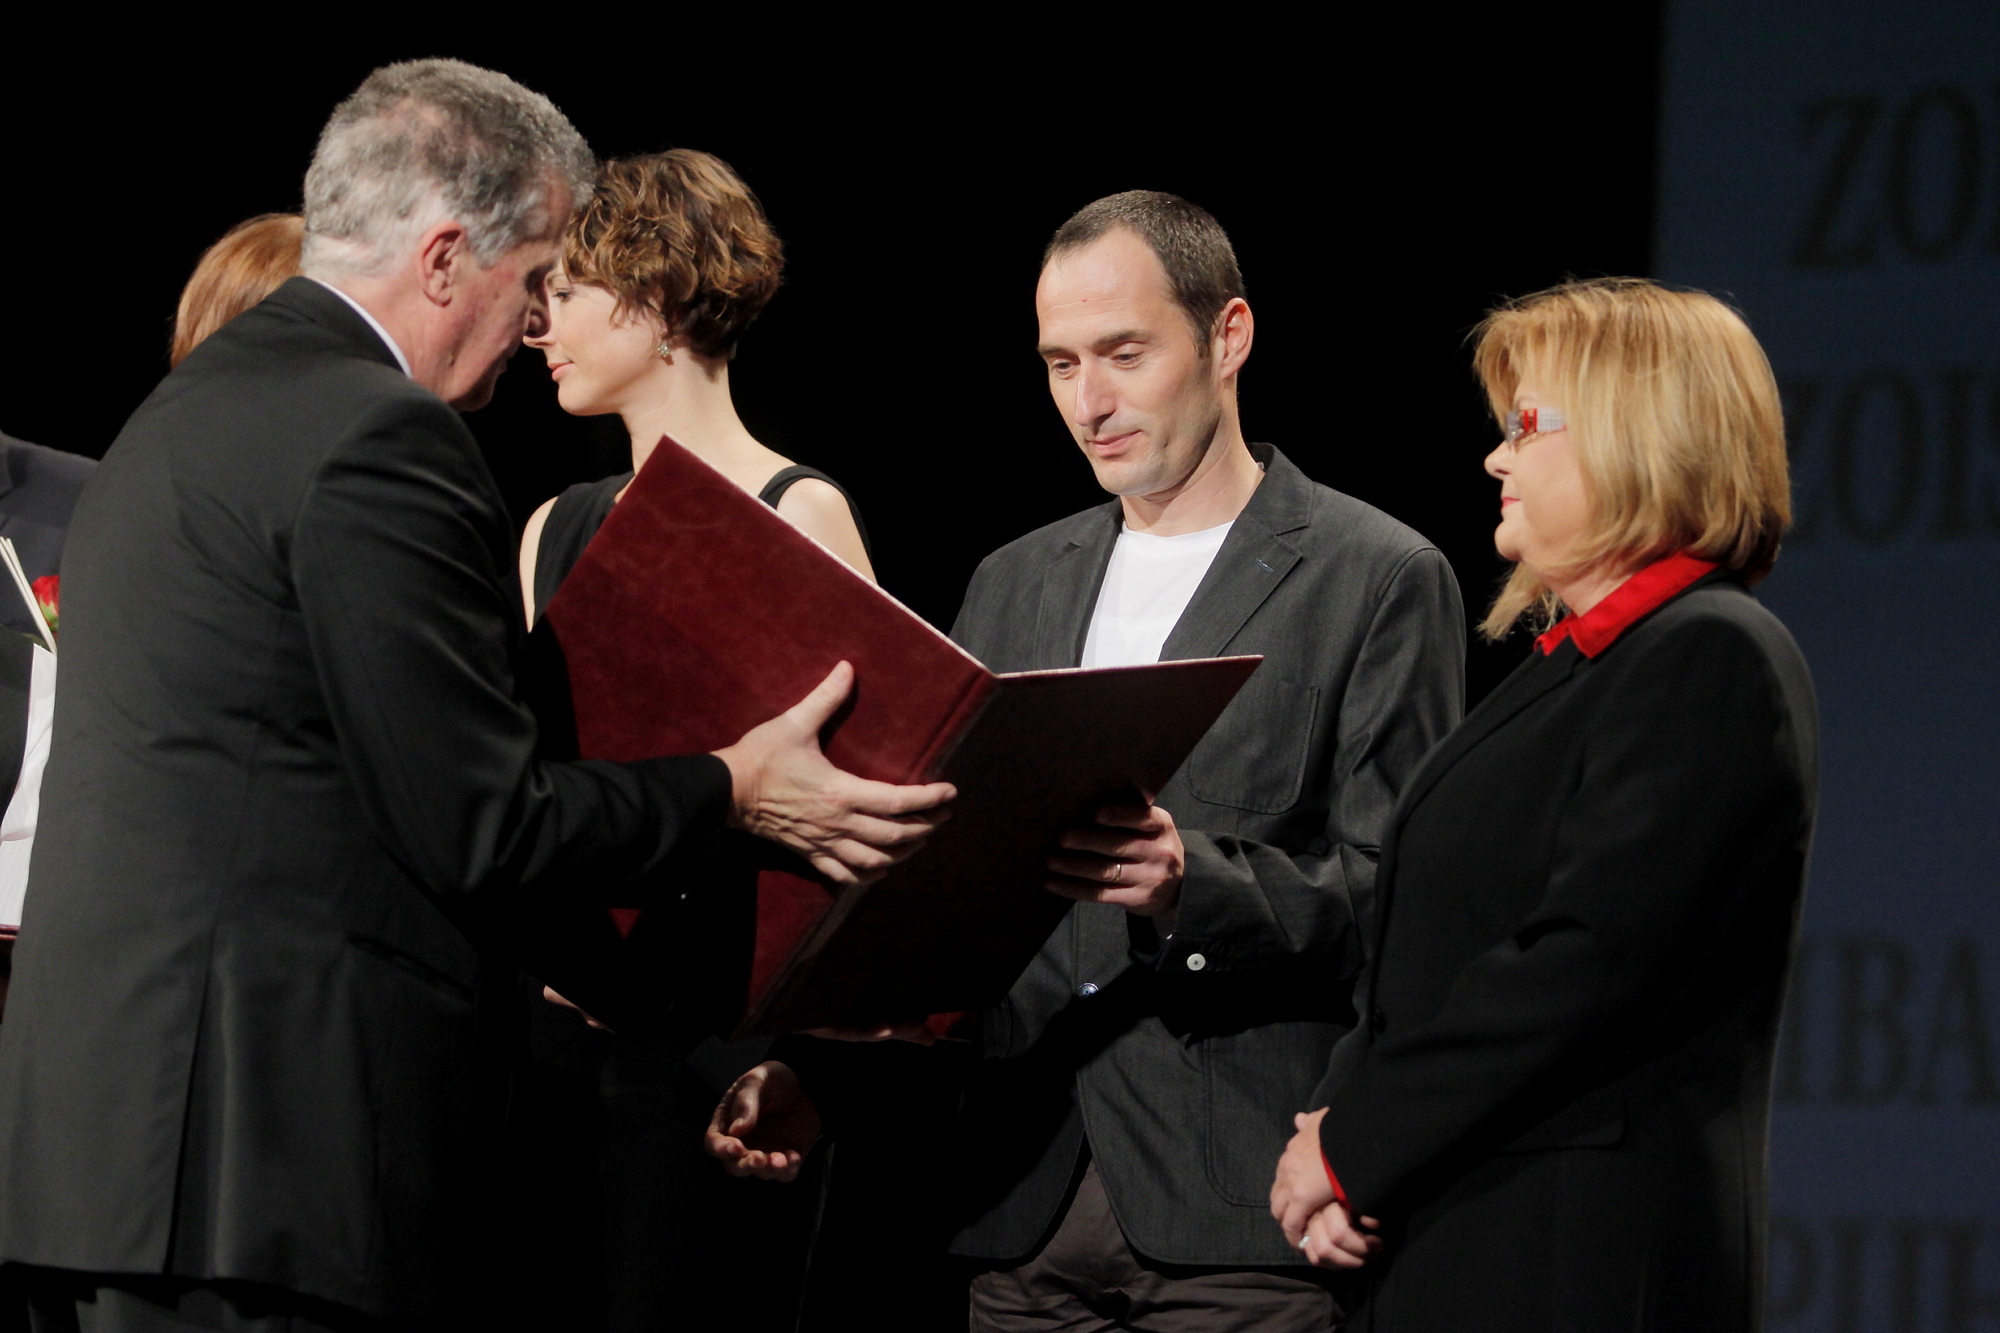 Assoc. Prof. Štefko Miklavič, PhD at the Zois Award Ceremony (Nova Gorica, 23 November 2012)